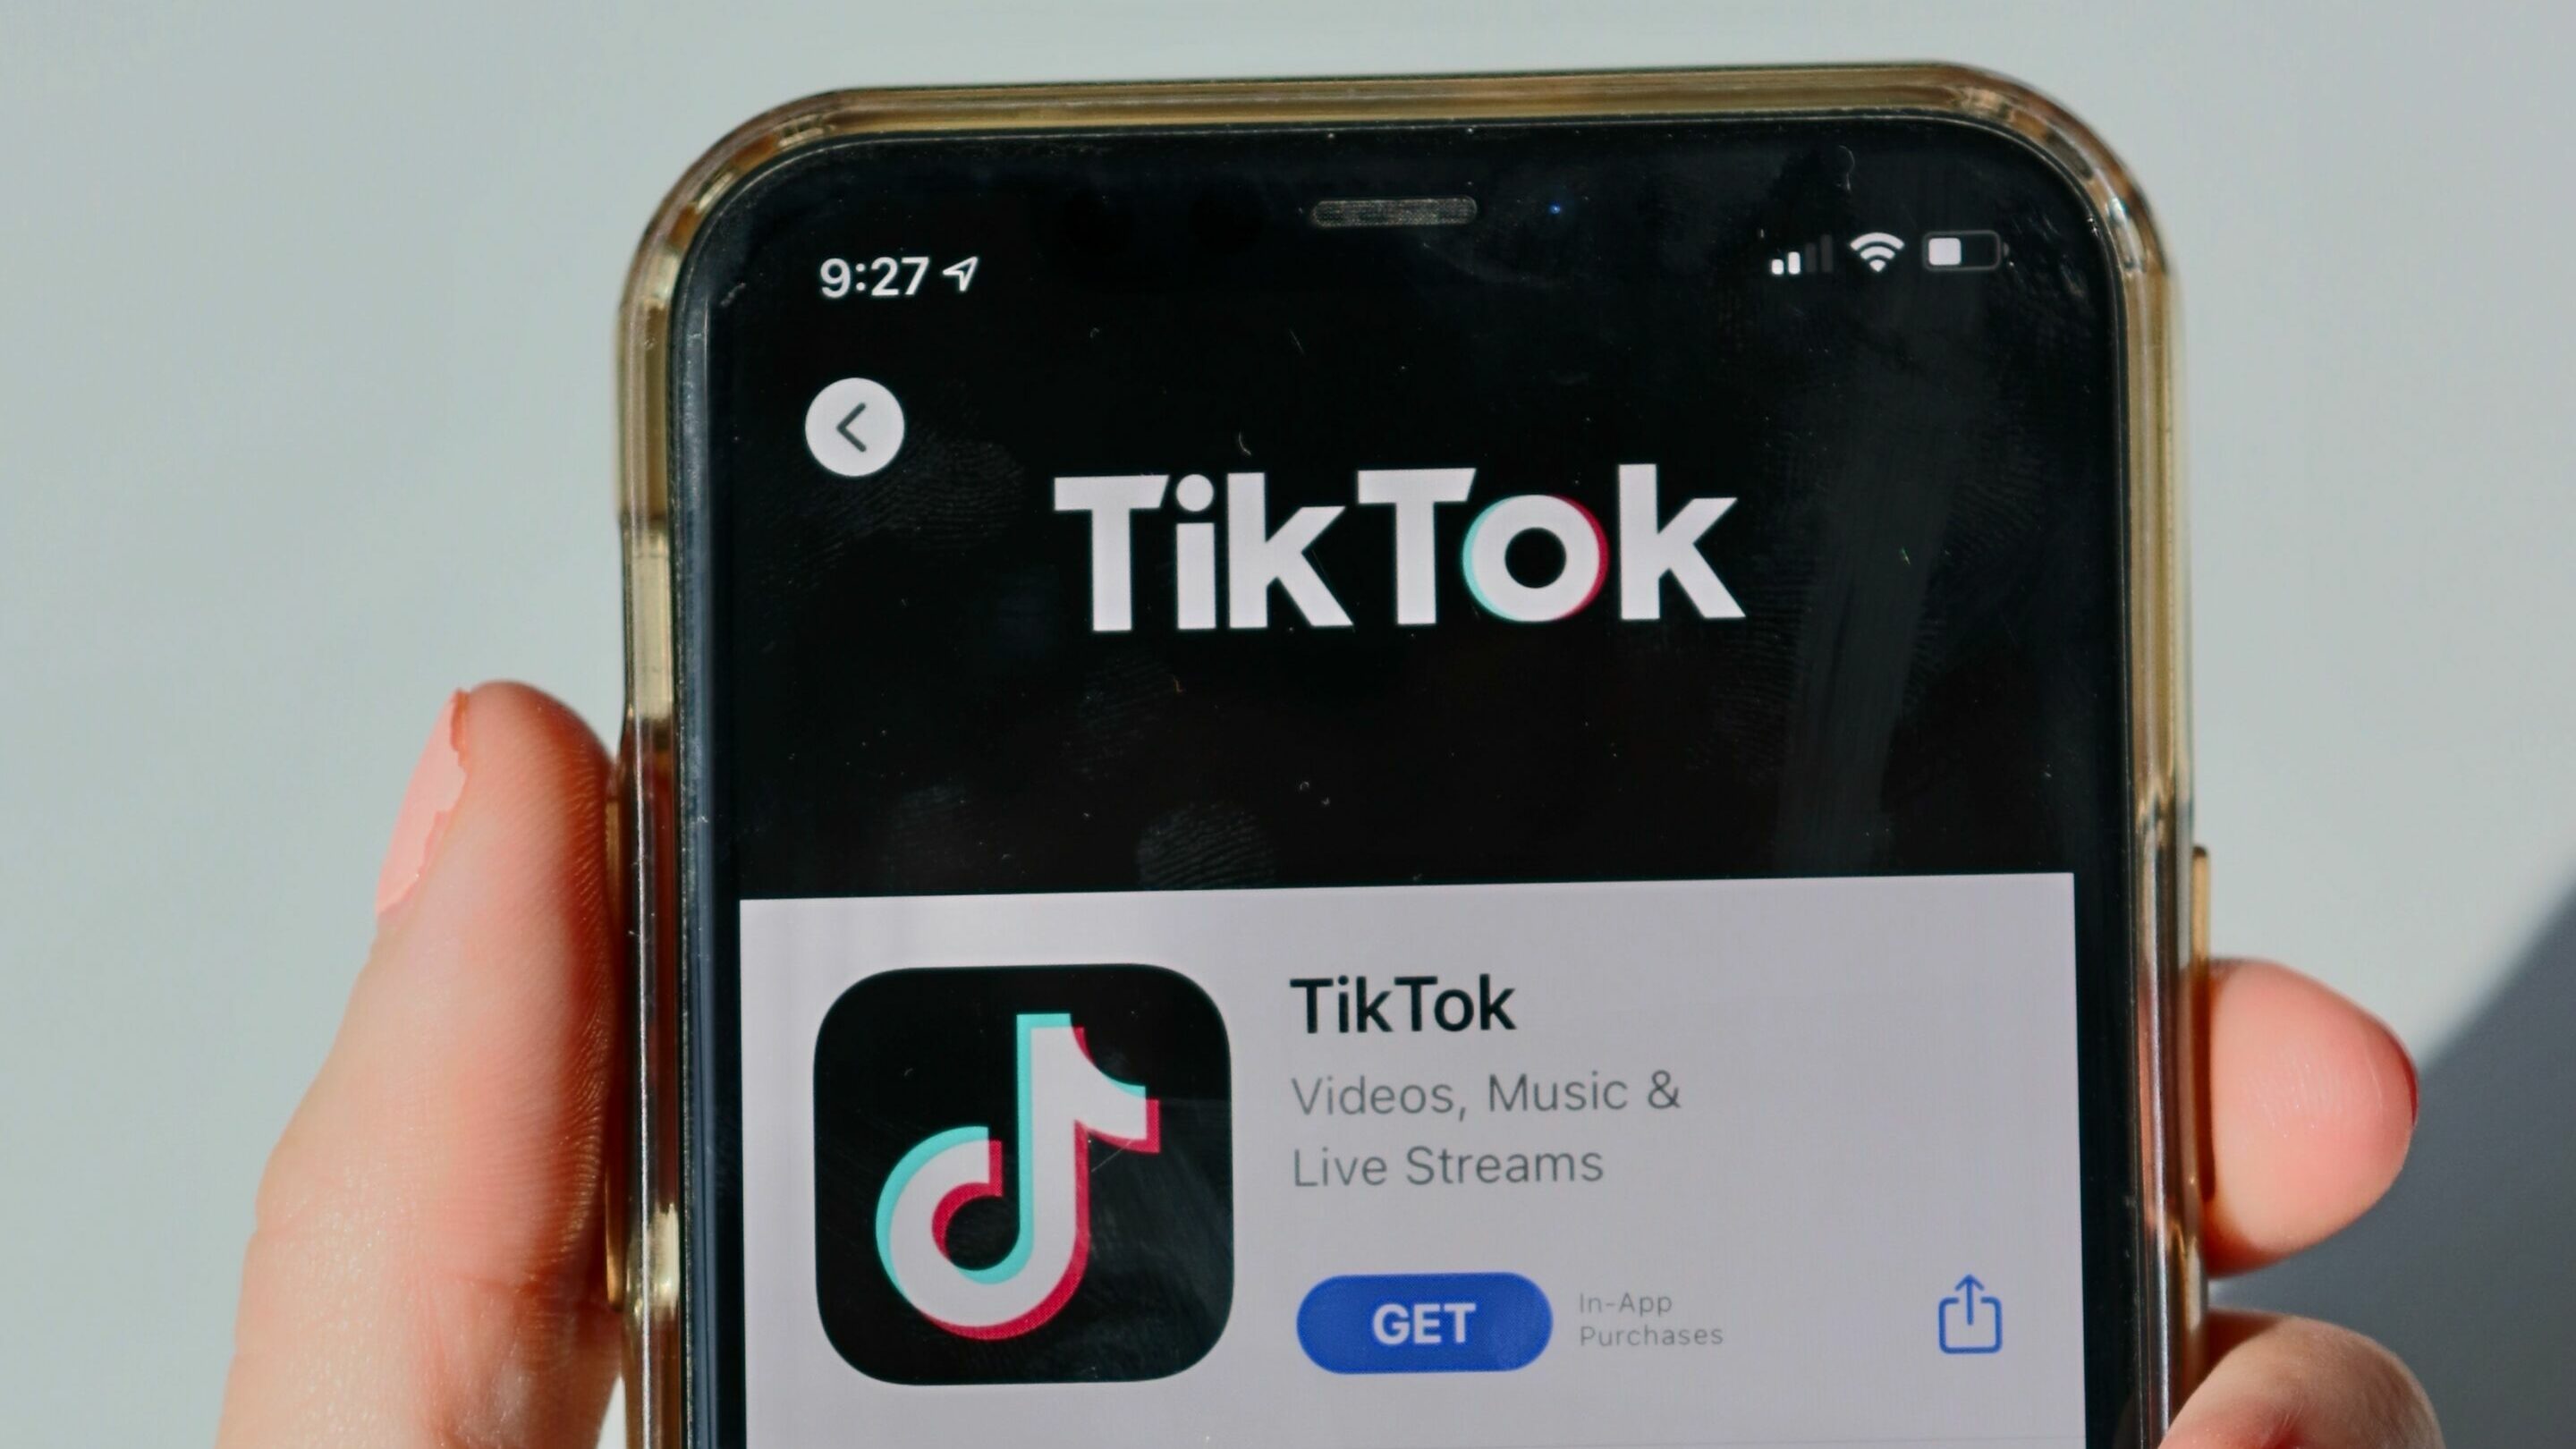 TikTok owner ByteDance has spent over $13m on US lobbying since 2019 (report) – Music Business Worldwide